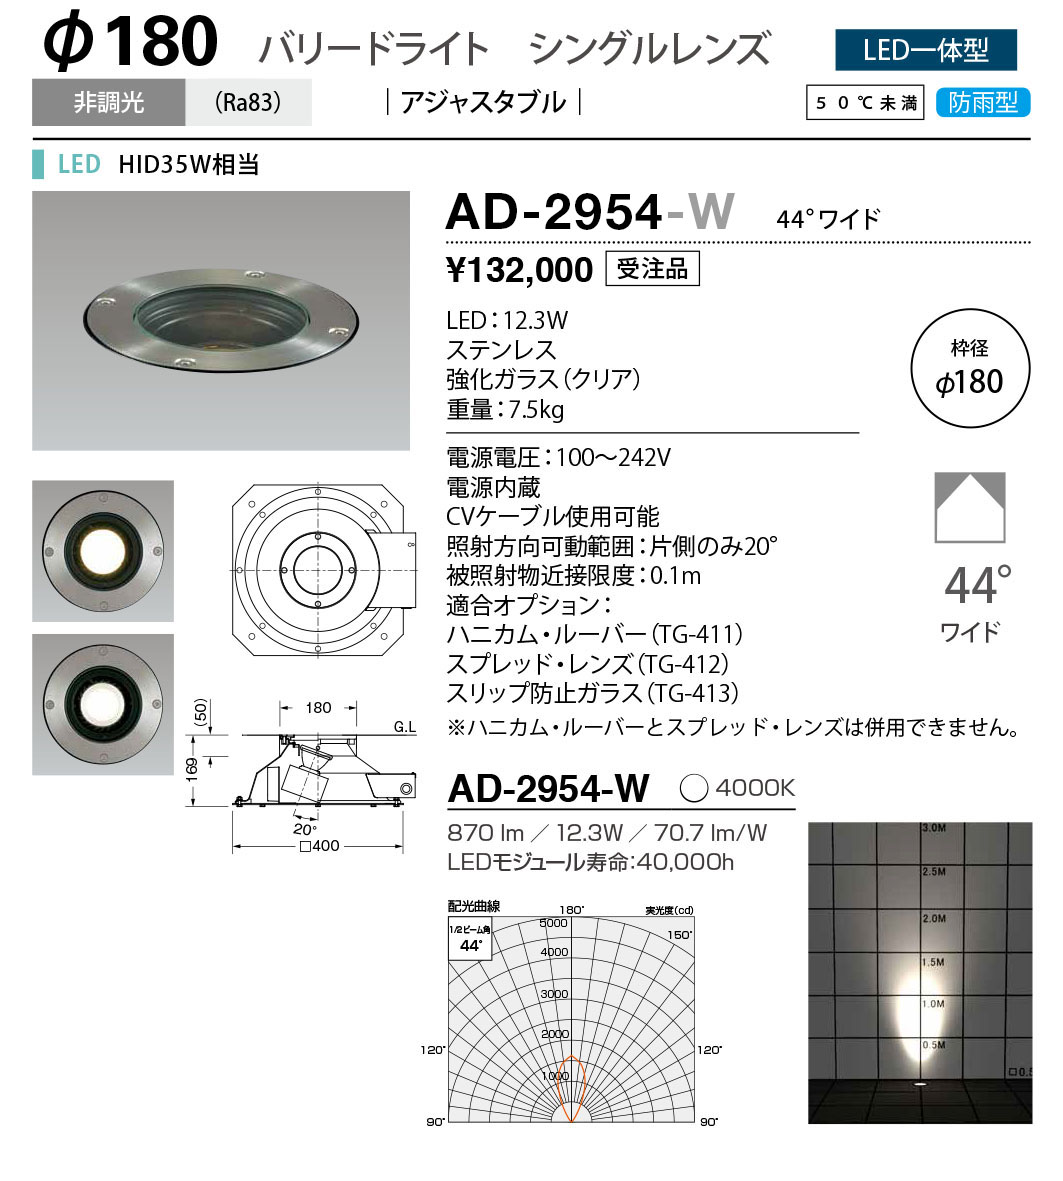 AD-2954-W(山田照明) 商品詳細 ～ 照明器具販売 激安のライトアップ